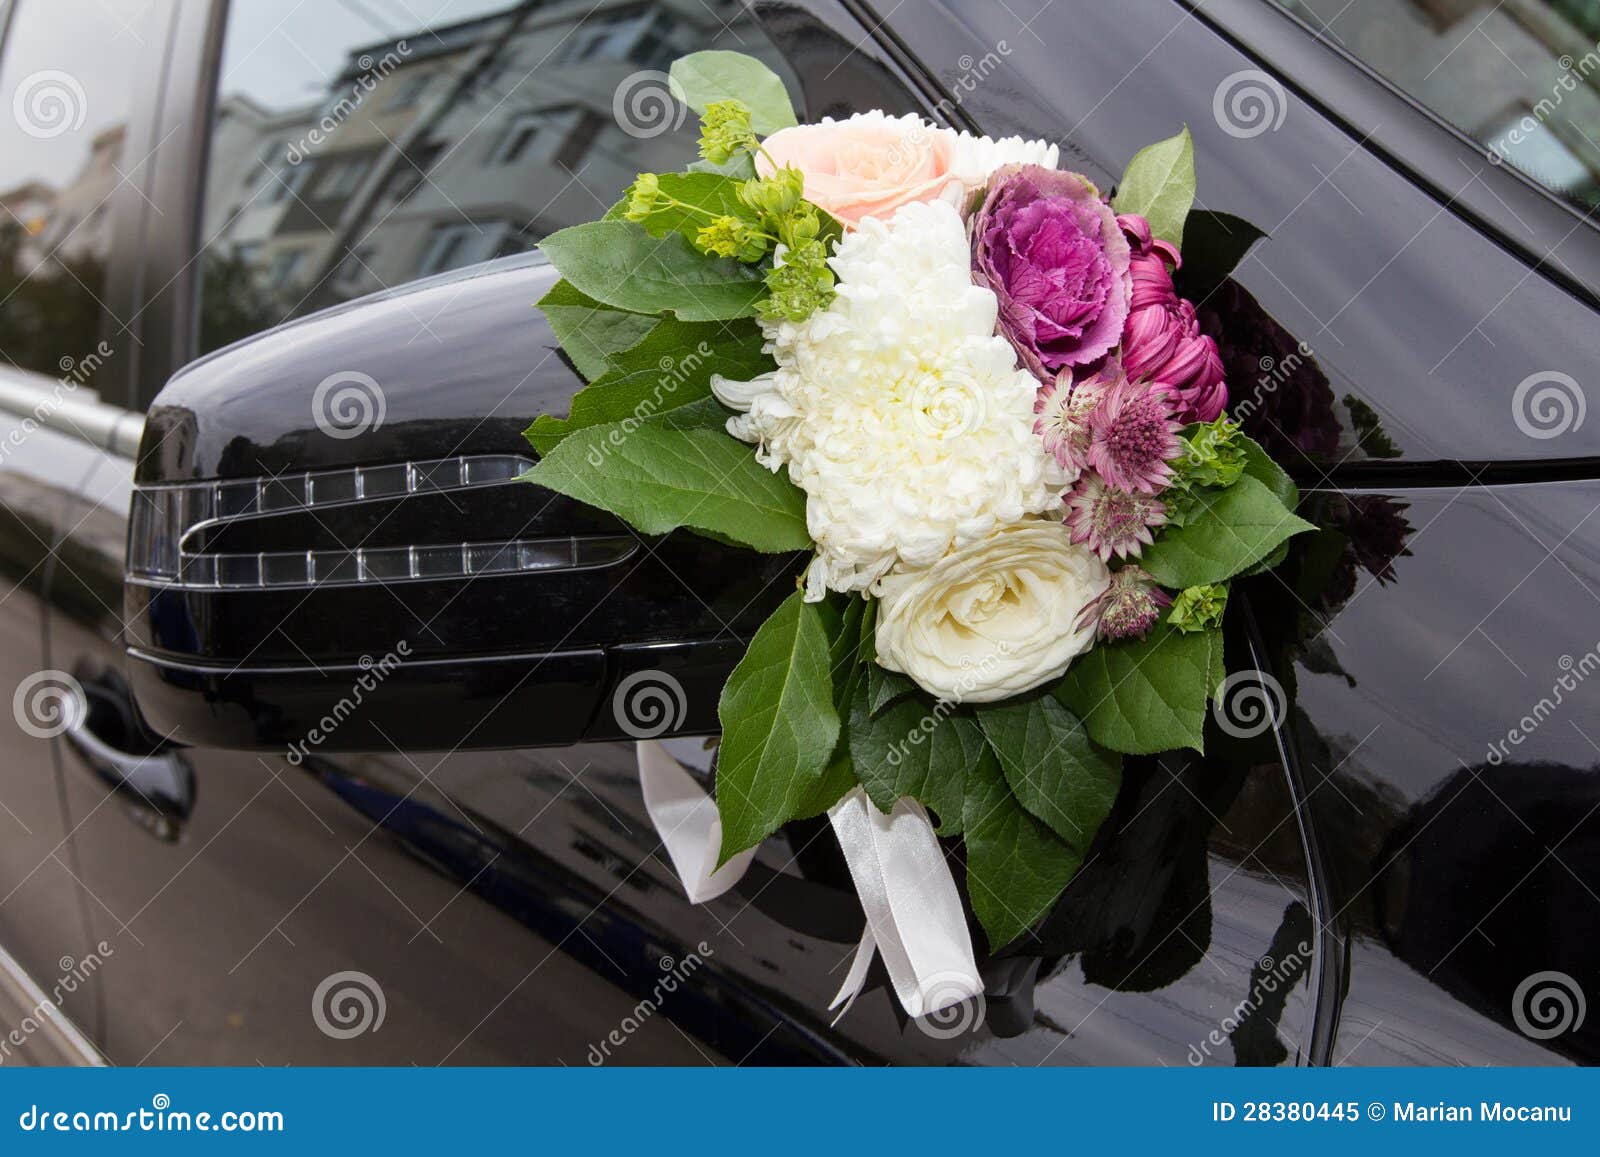 https://thumbs.dreamstime.com/z/wedding-car-decoration-28380445.jpg